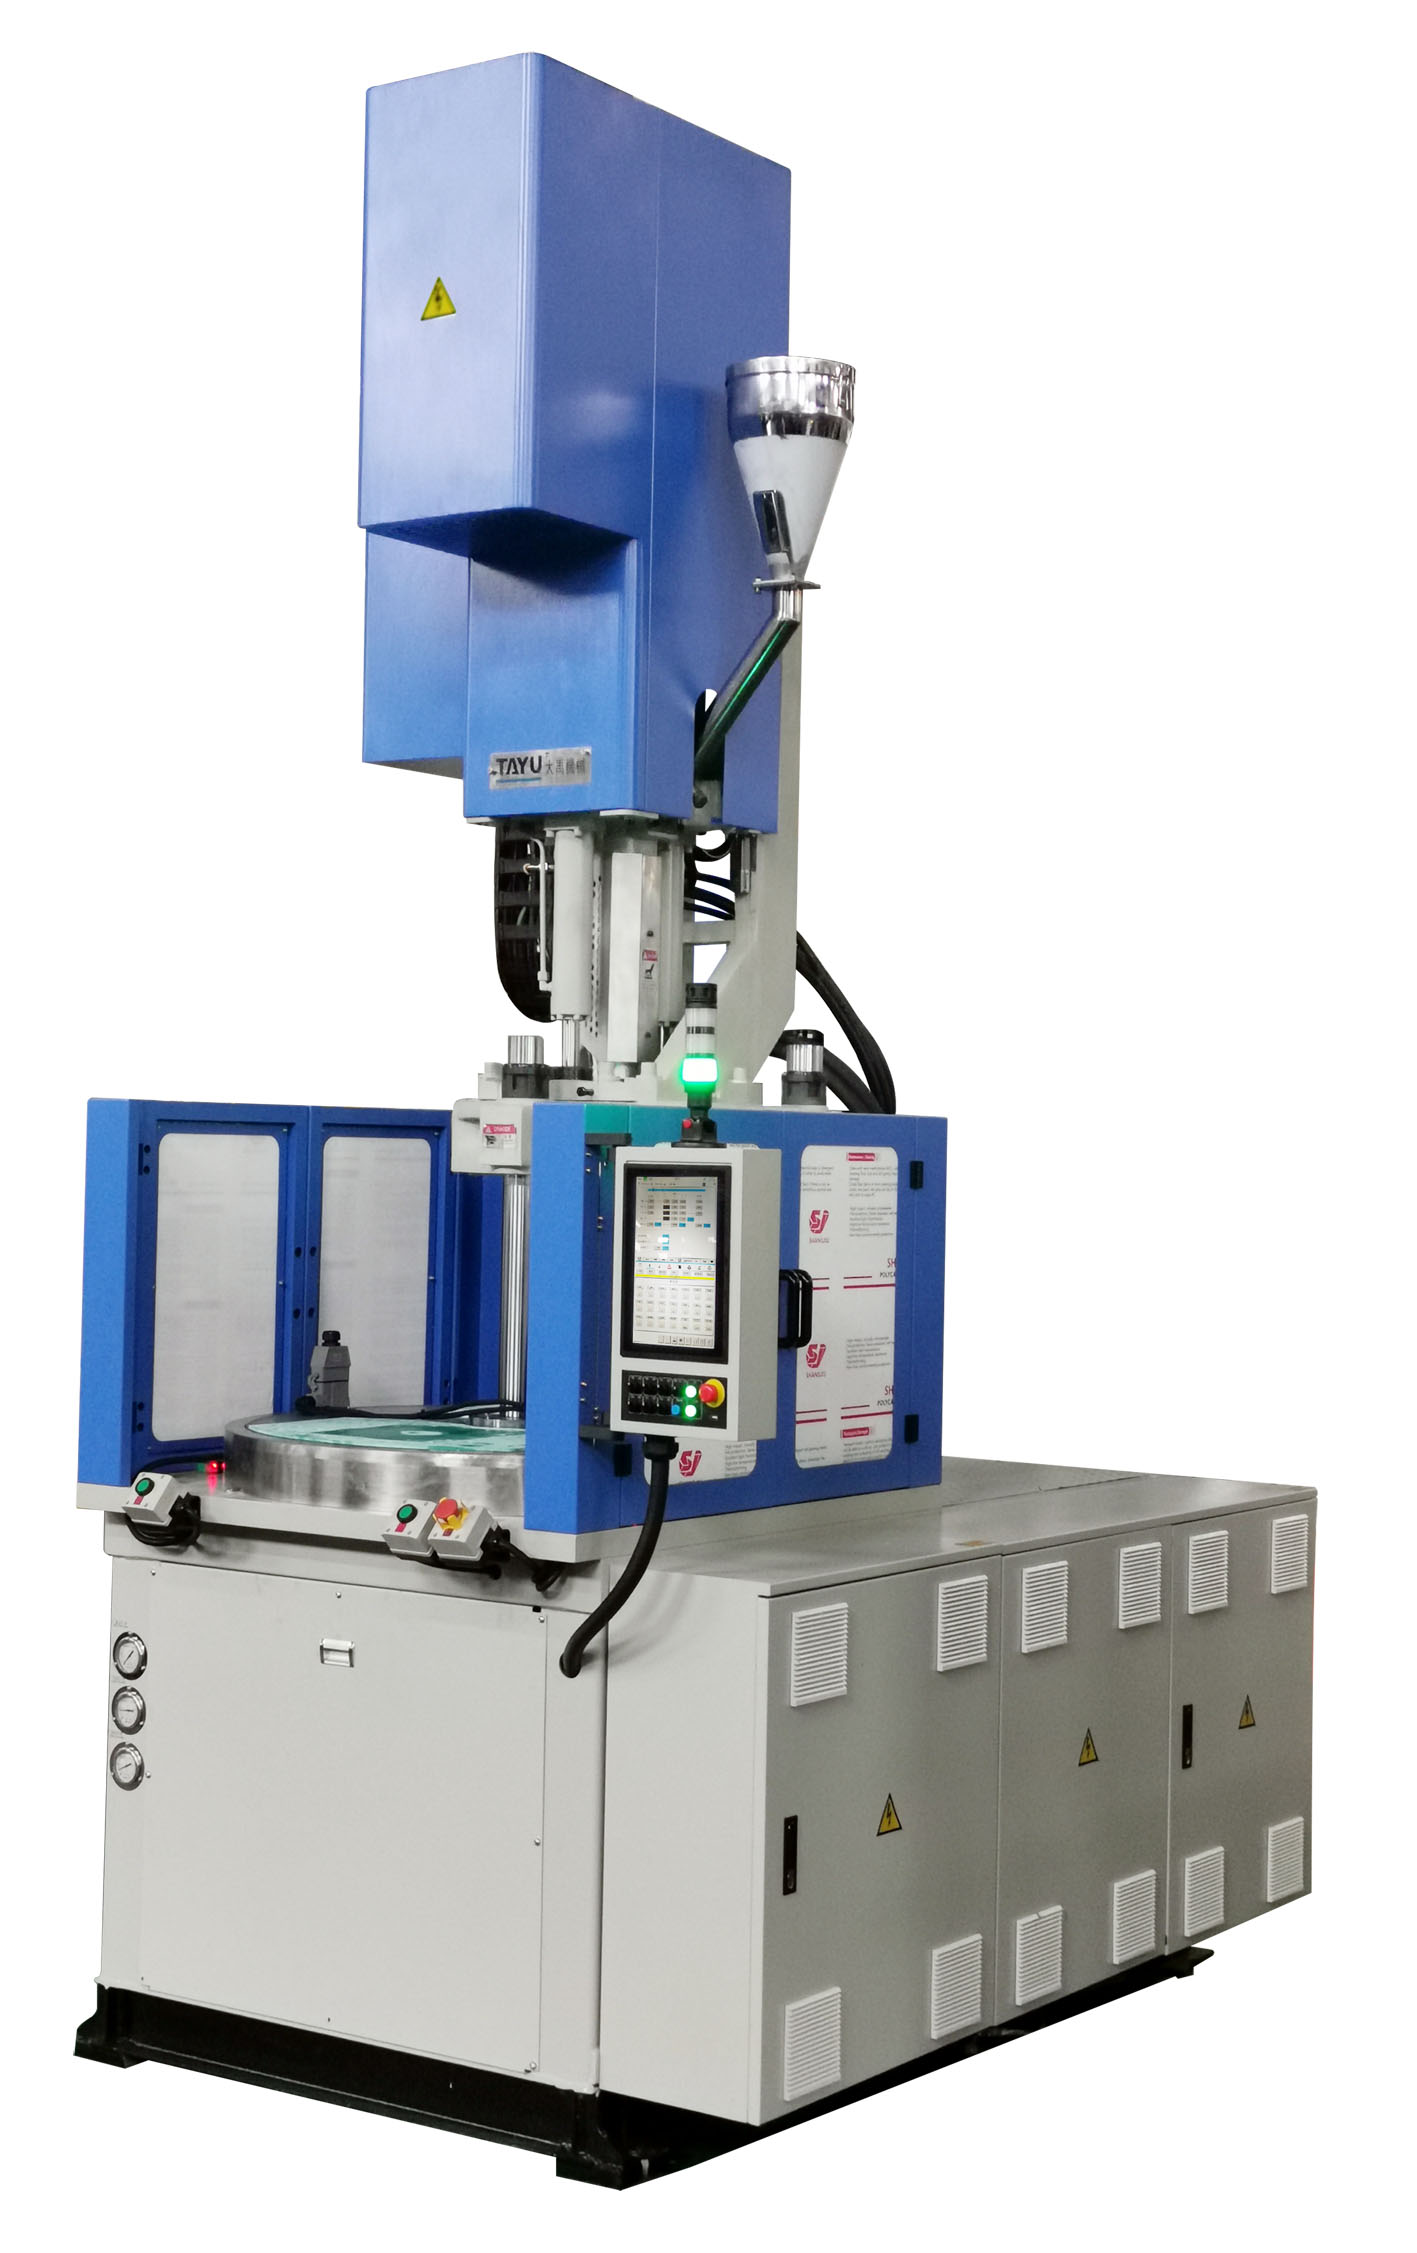 ET-850.2R vertical injection molding machine